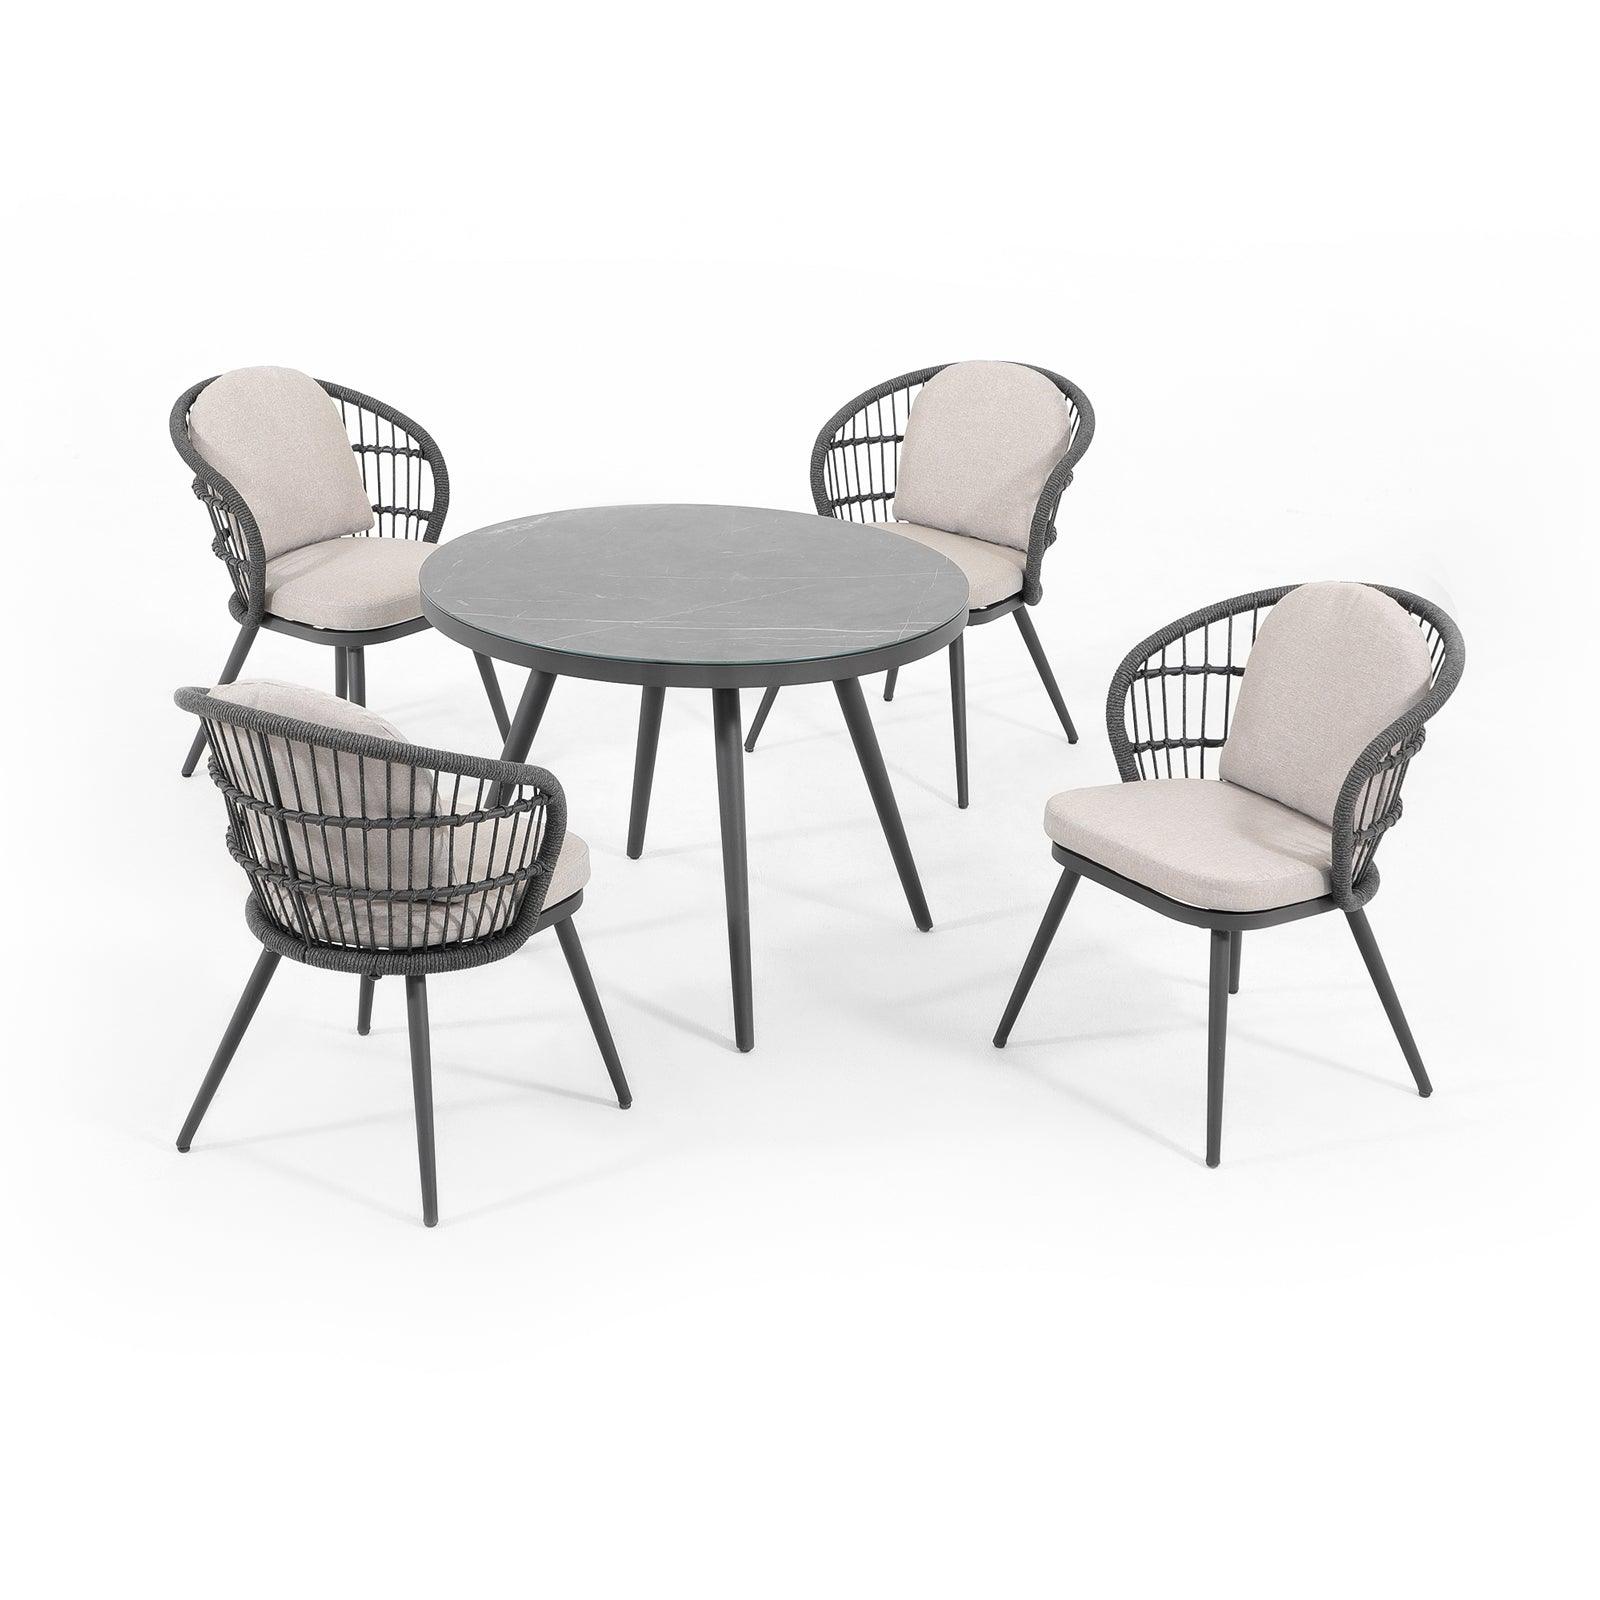 Comino dark grey rope outdoor Dining Set with aluminum frame, light grey cushions, 4 dining seats, 1 round table - Jardina Furniture